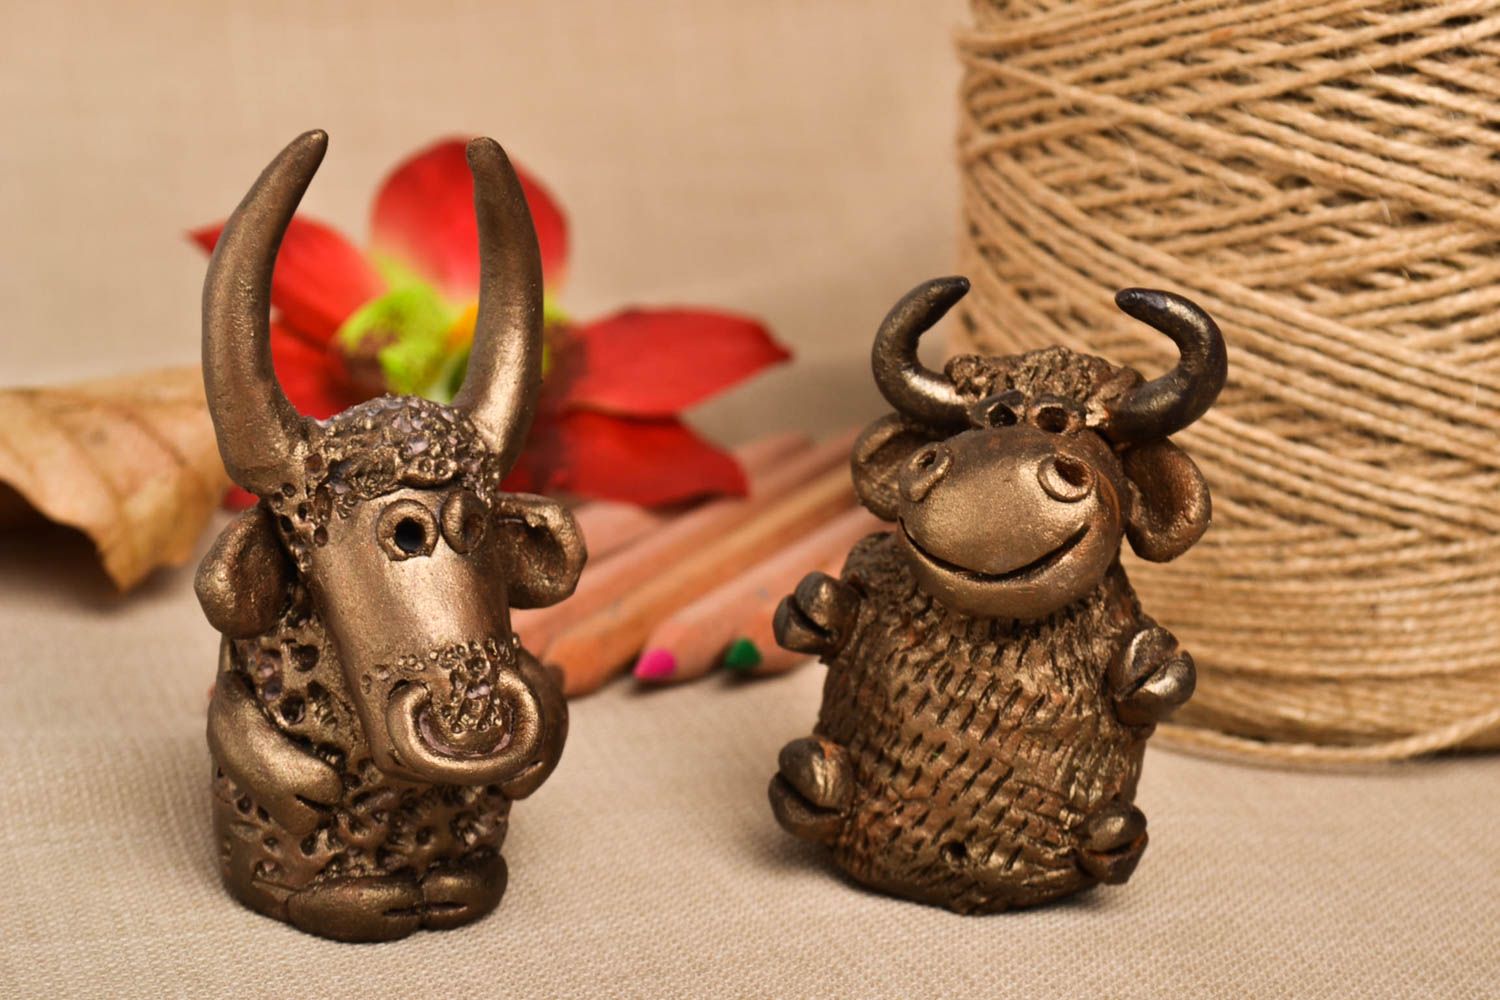 Handmade figurines animal figurines decorative use only clay figurines photo 1